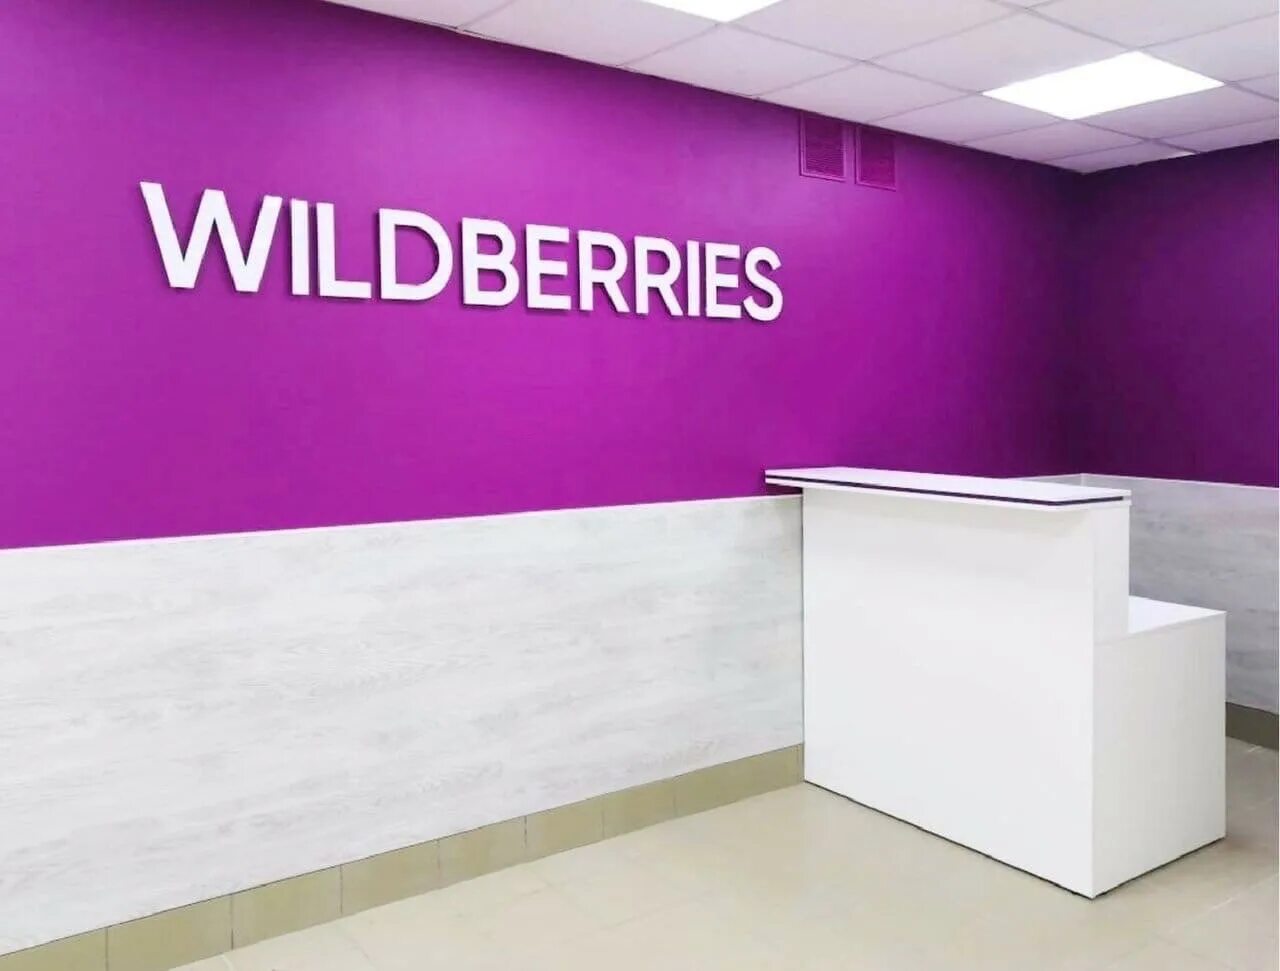 Wildberries. Пункт Wildberries. Wildberries логотип. Wildberries Фоновое изображение. Https suppliers wildberries ru